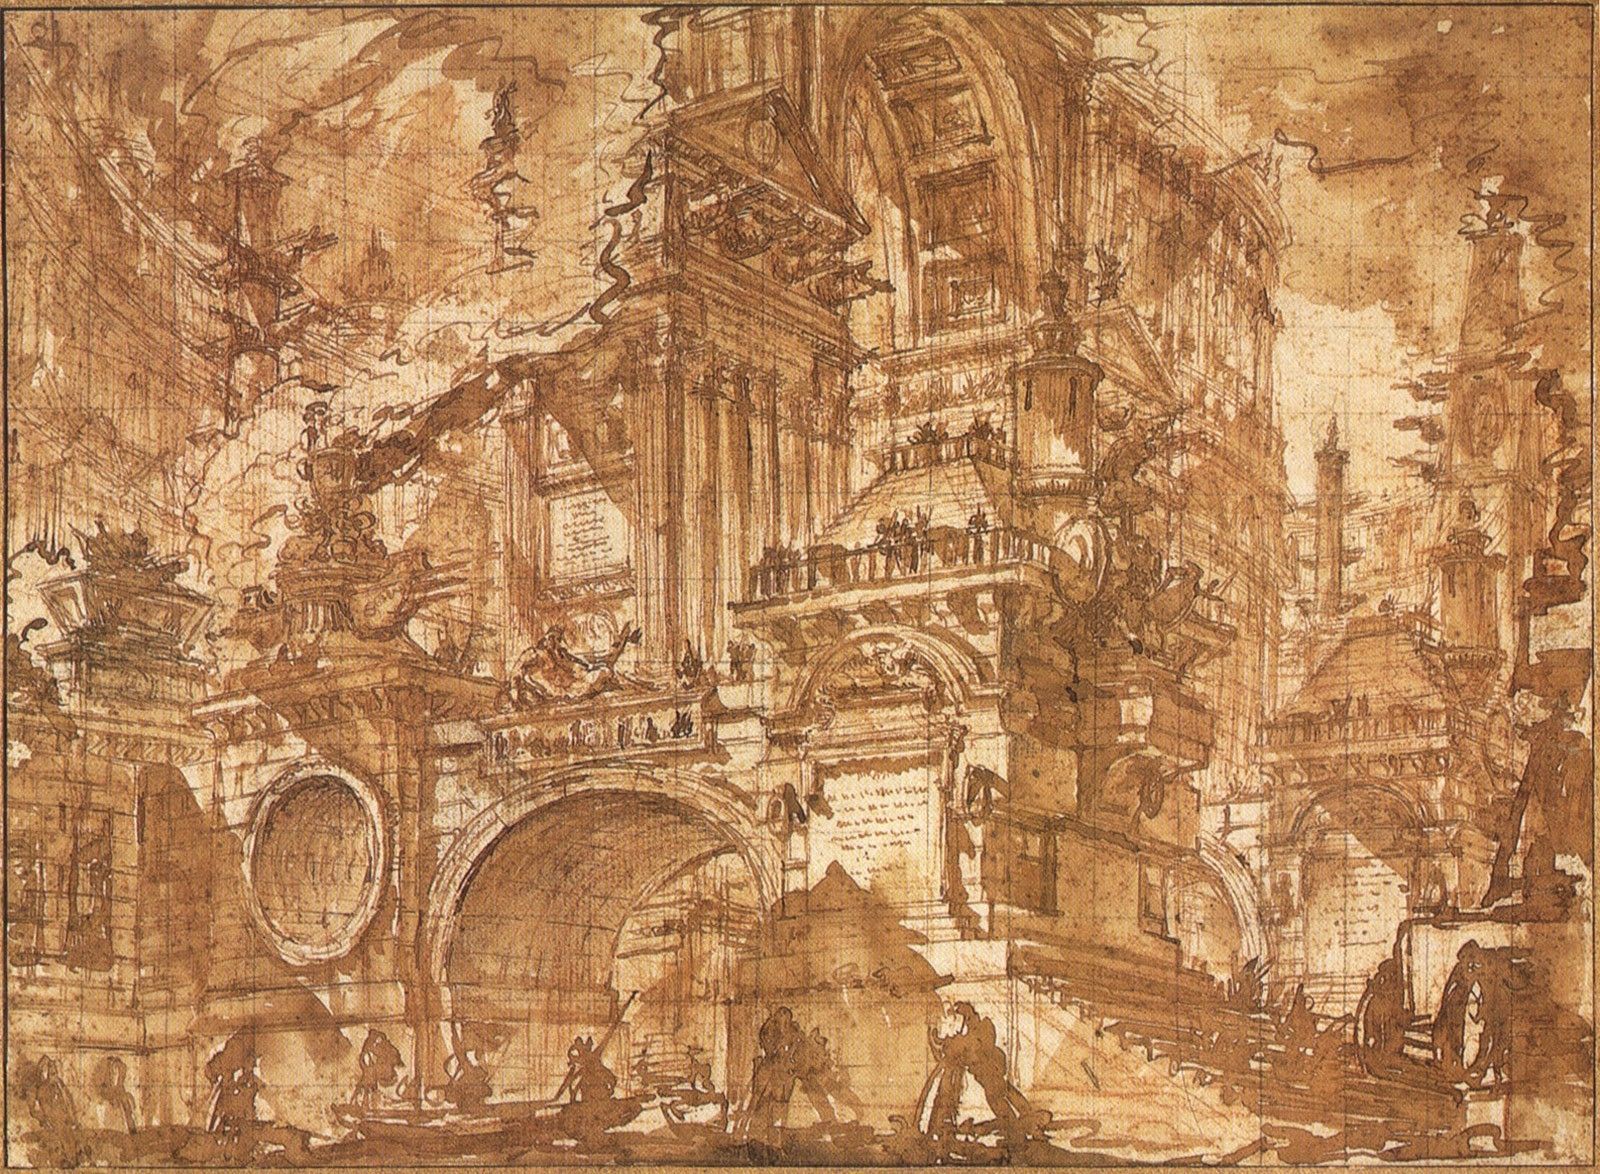 Renaissance Painting Background